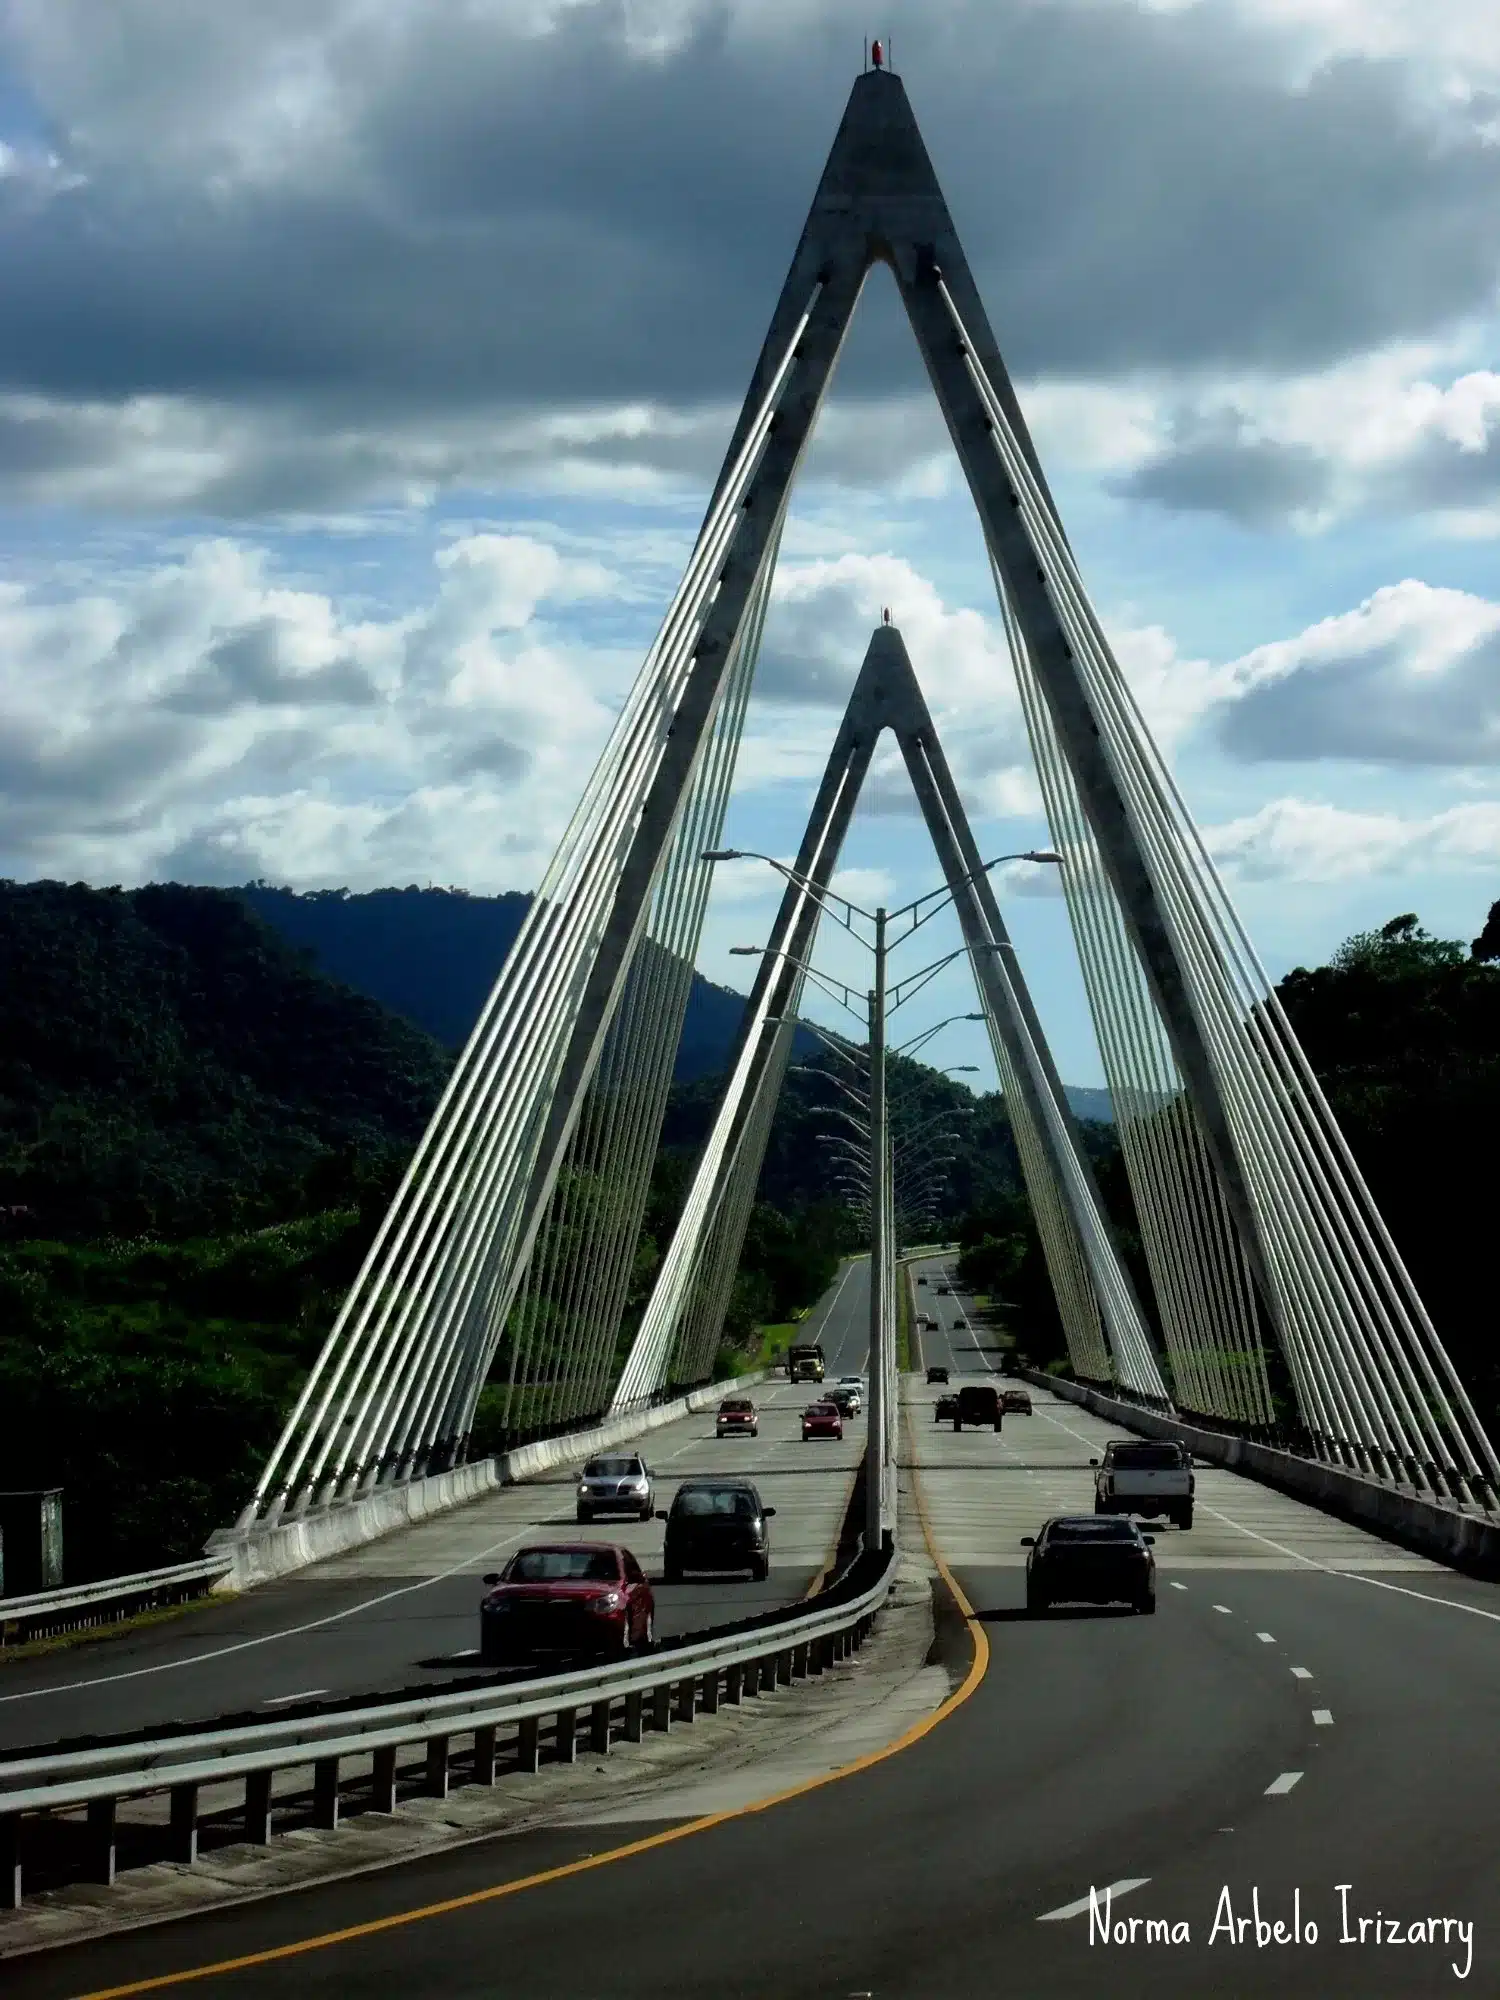 The saga of the Naranjito bridge in Puerto Rico, in context